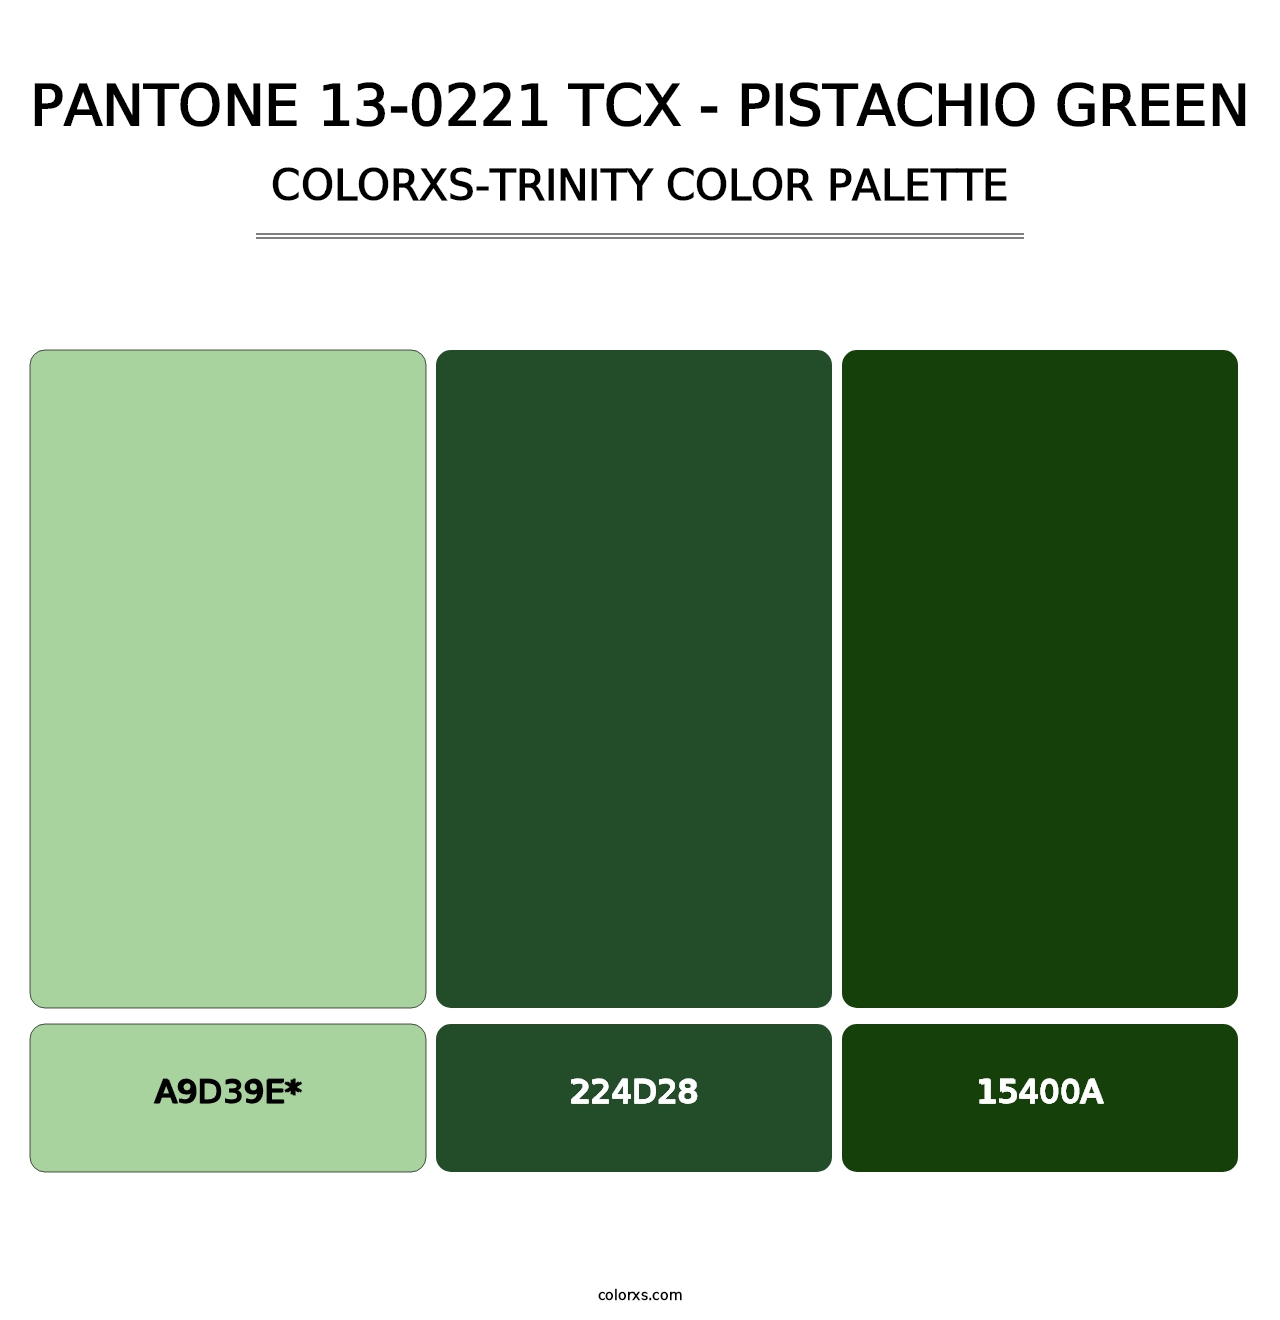 PANTONE 13-0221 TCX - Pistachio Green - Colorxs Trinity Palette